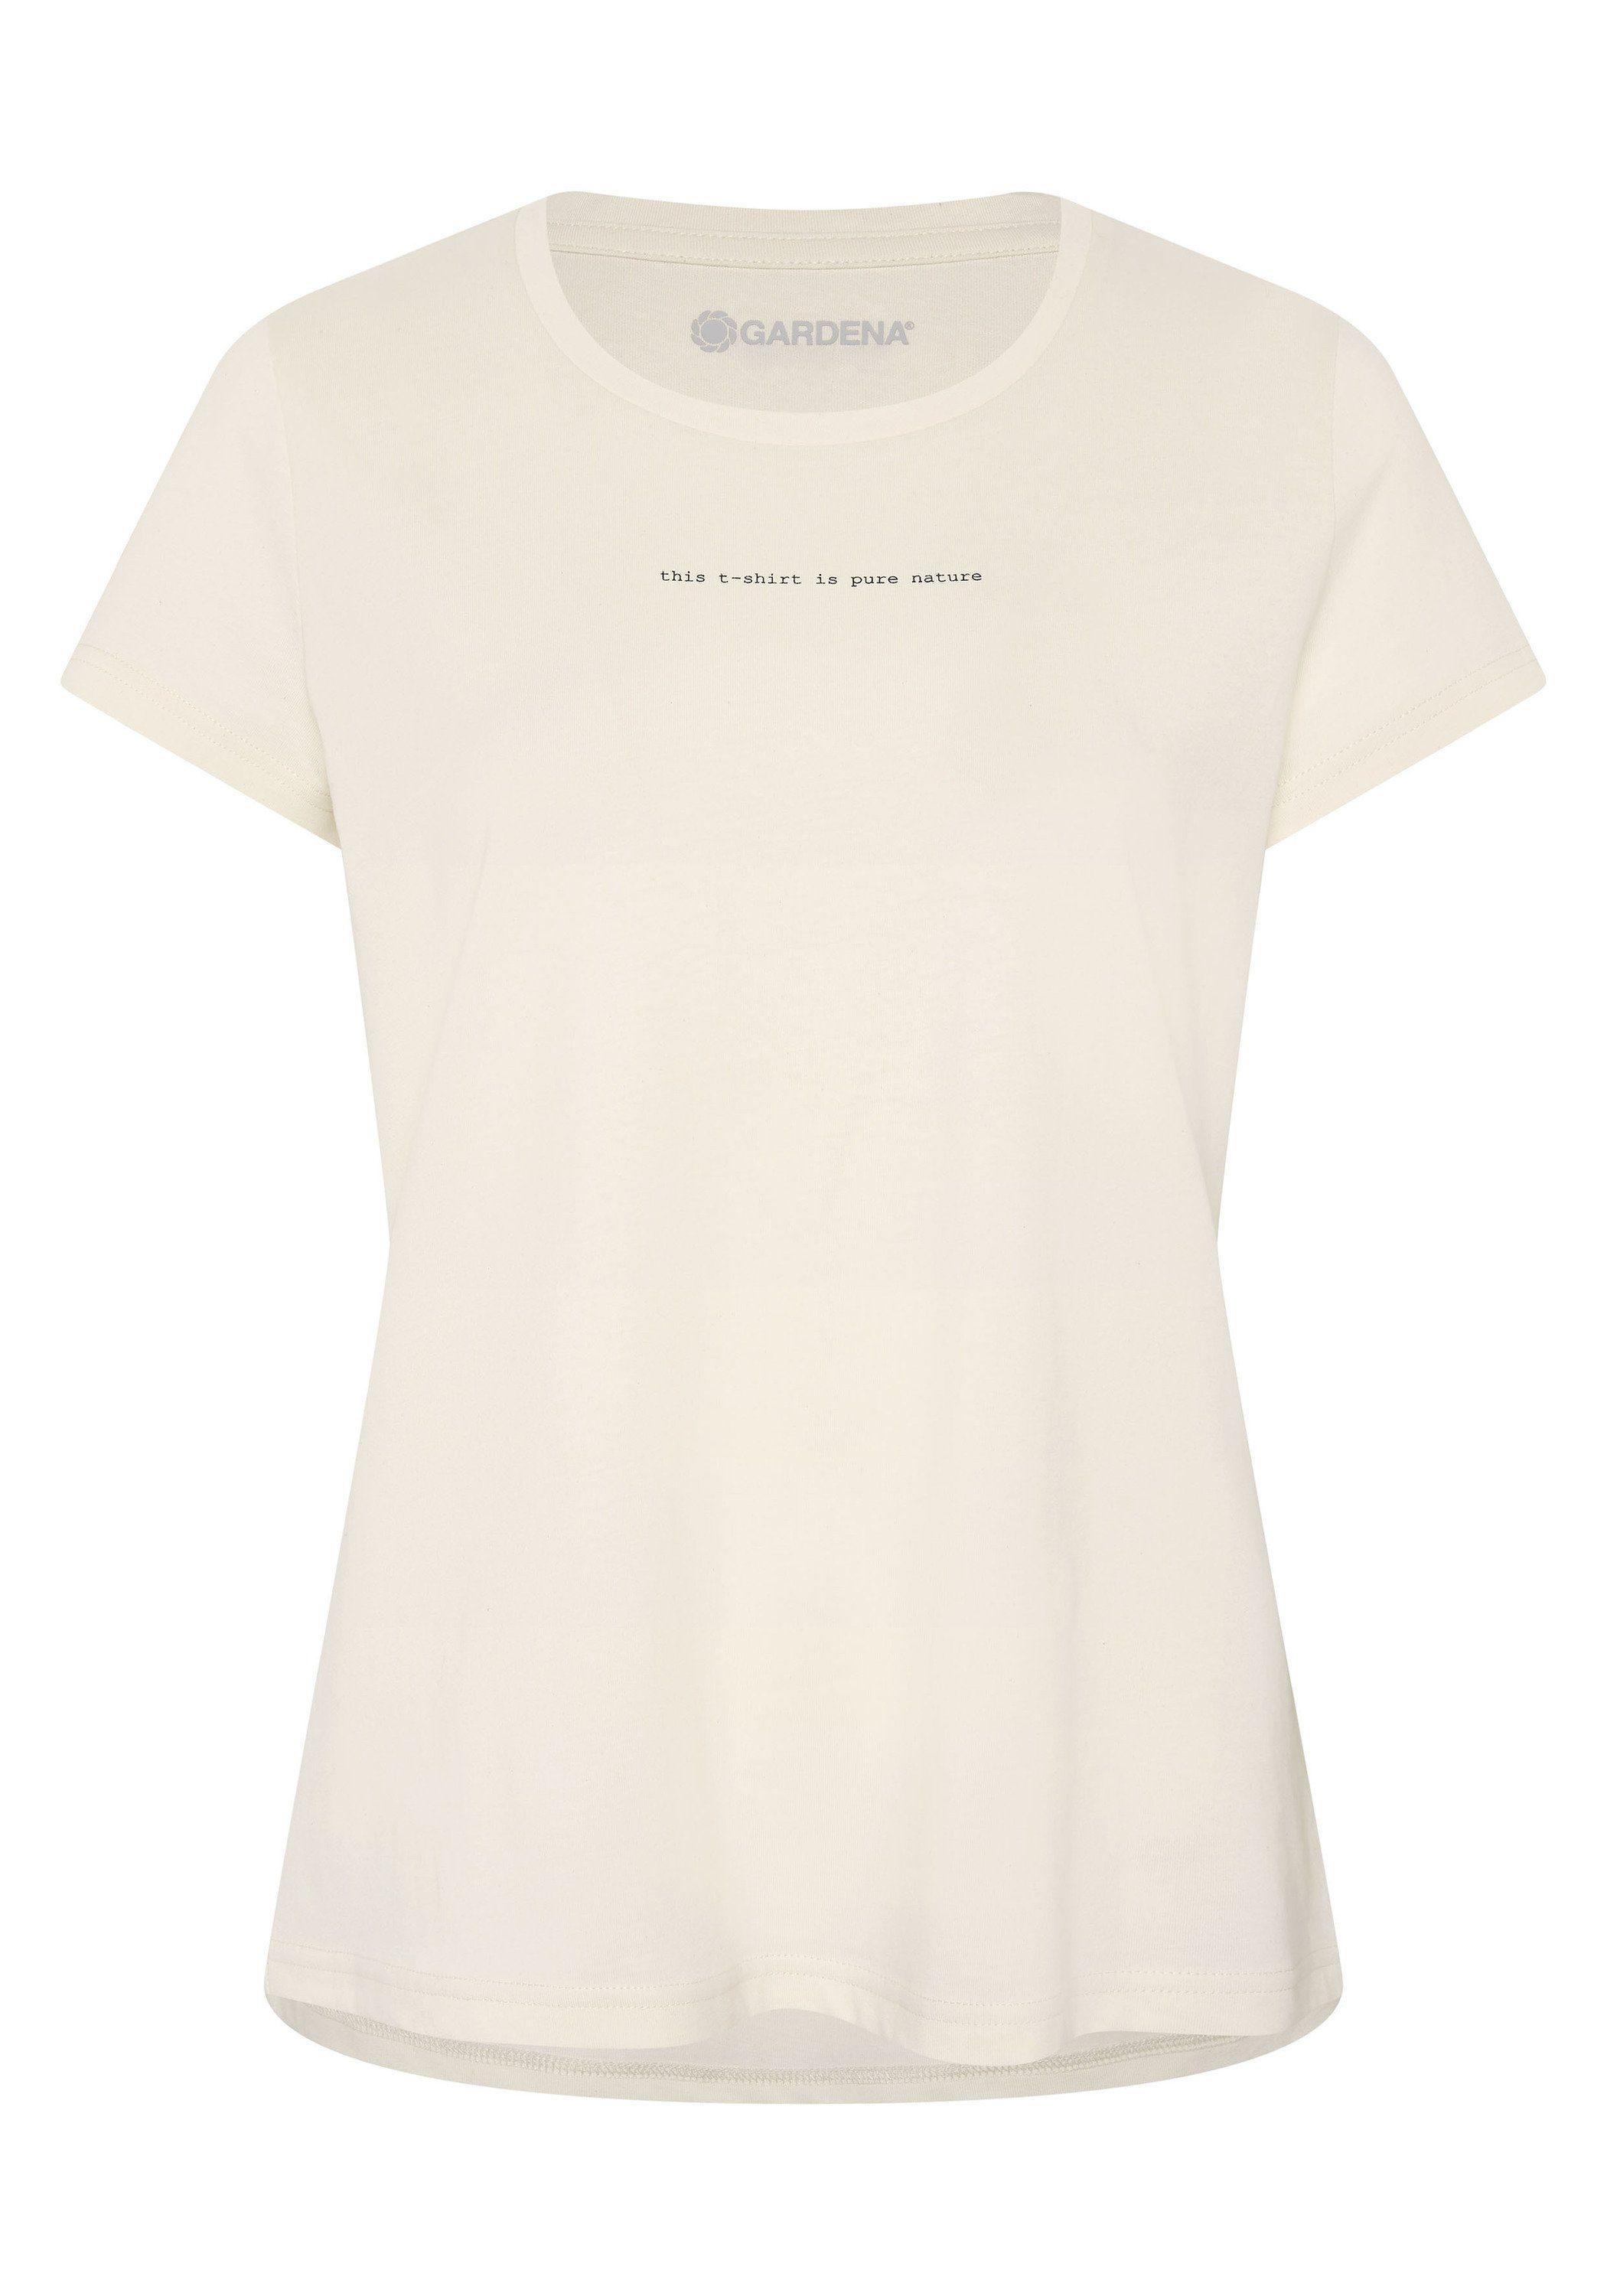 GARDENA Print-Shirt mit this t-shirt is pure nature Print